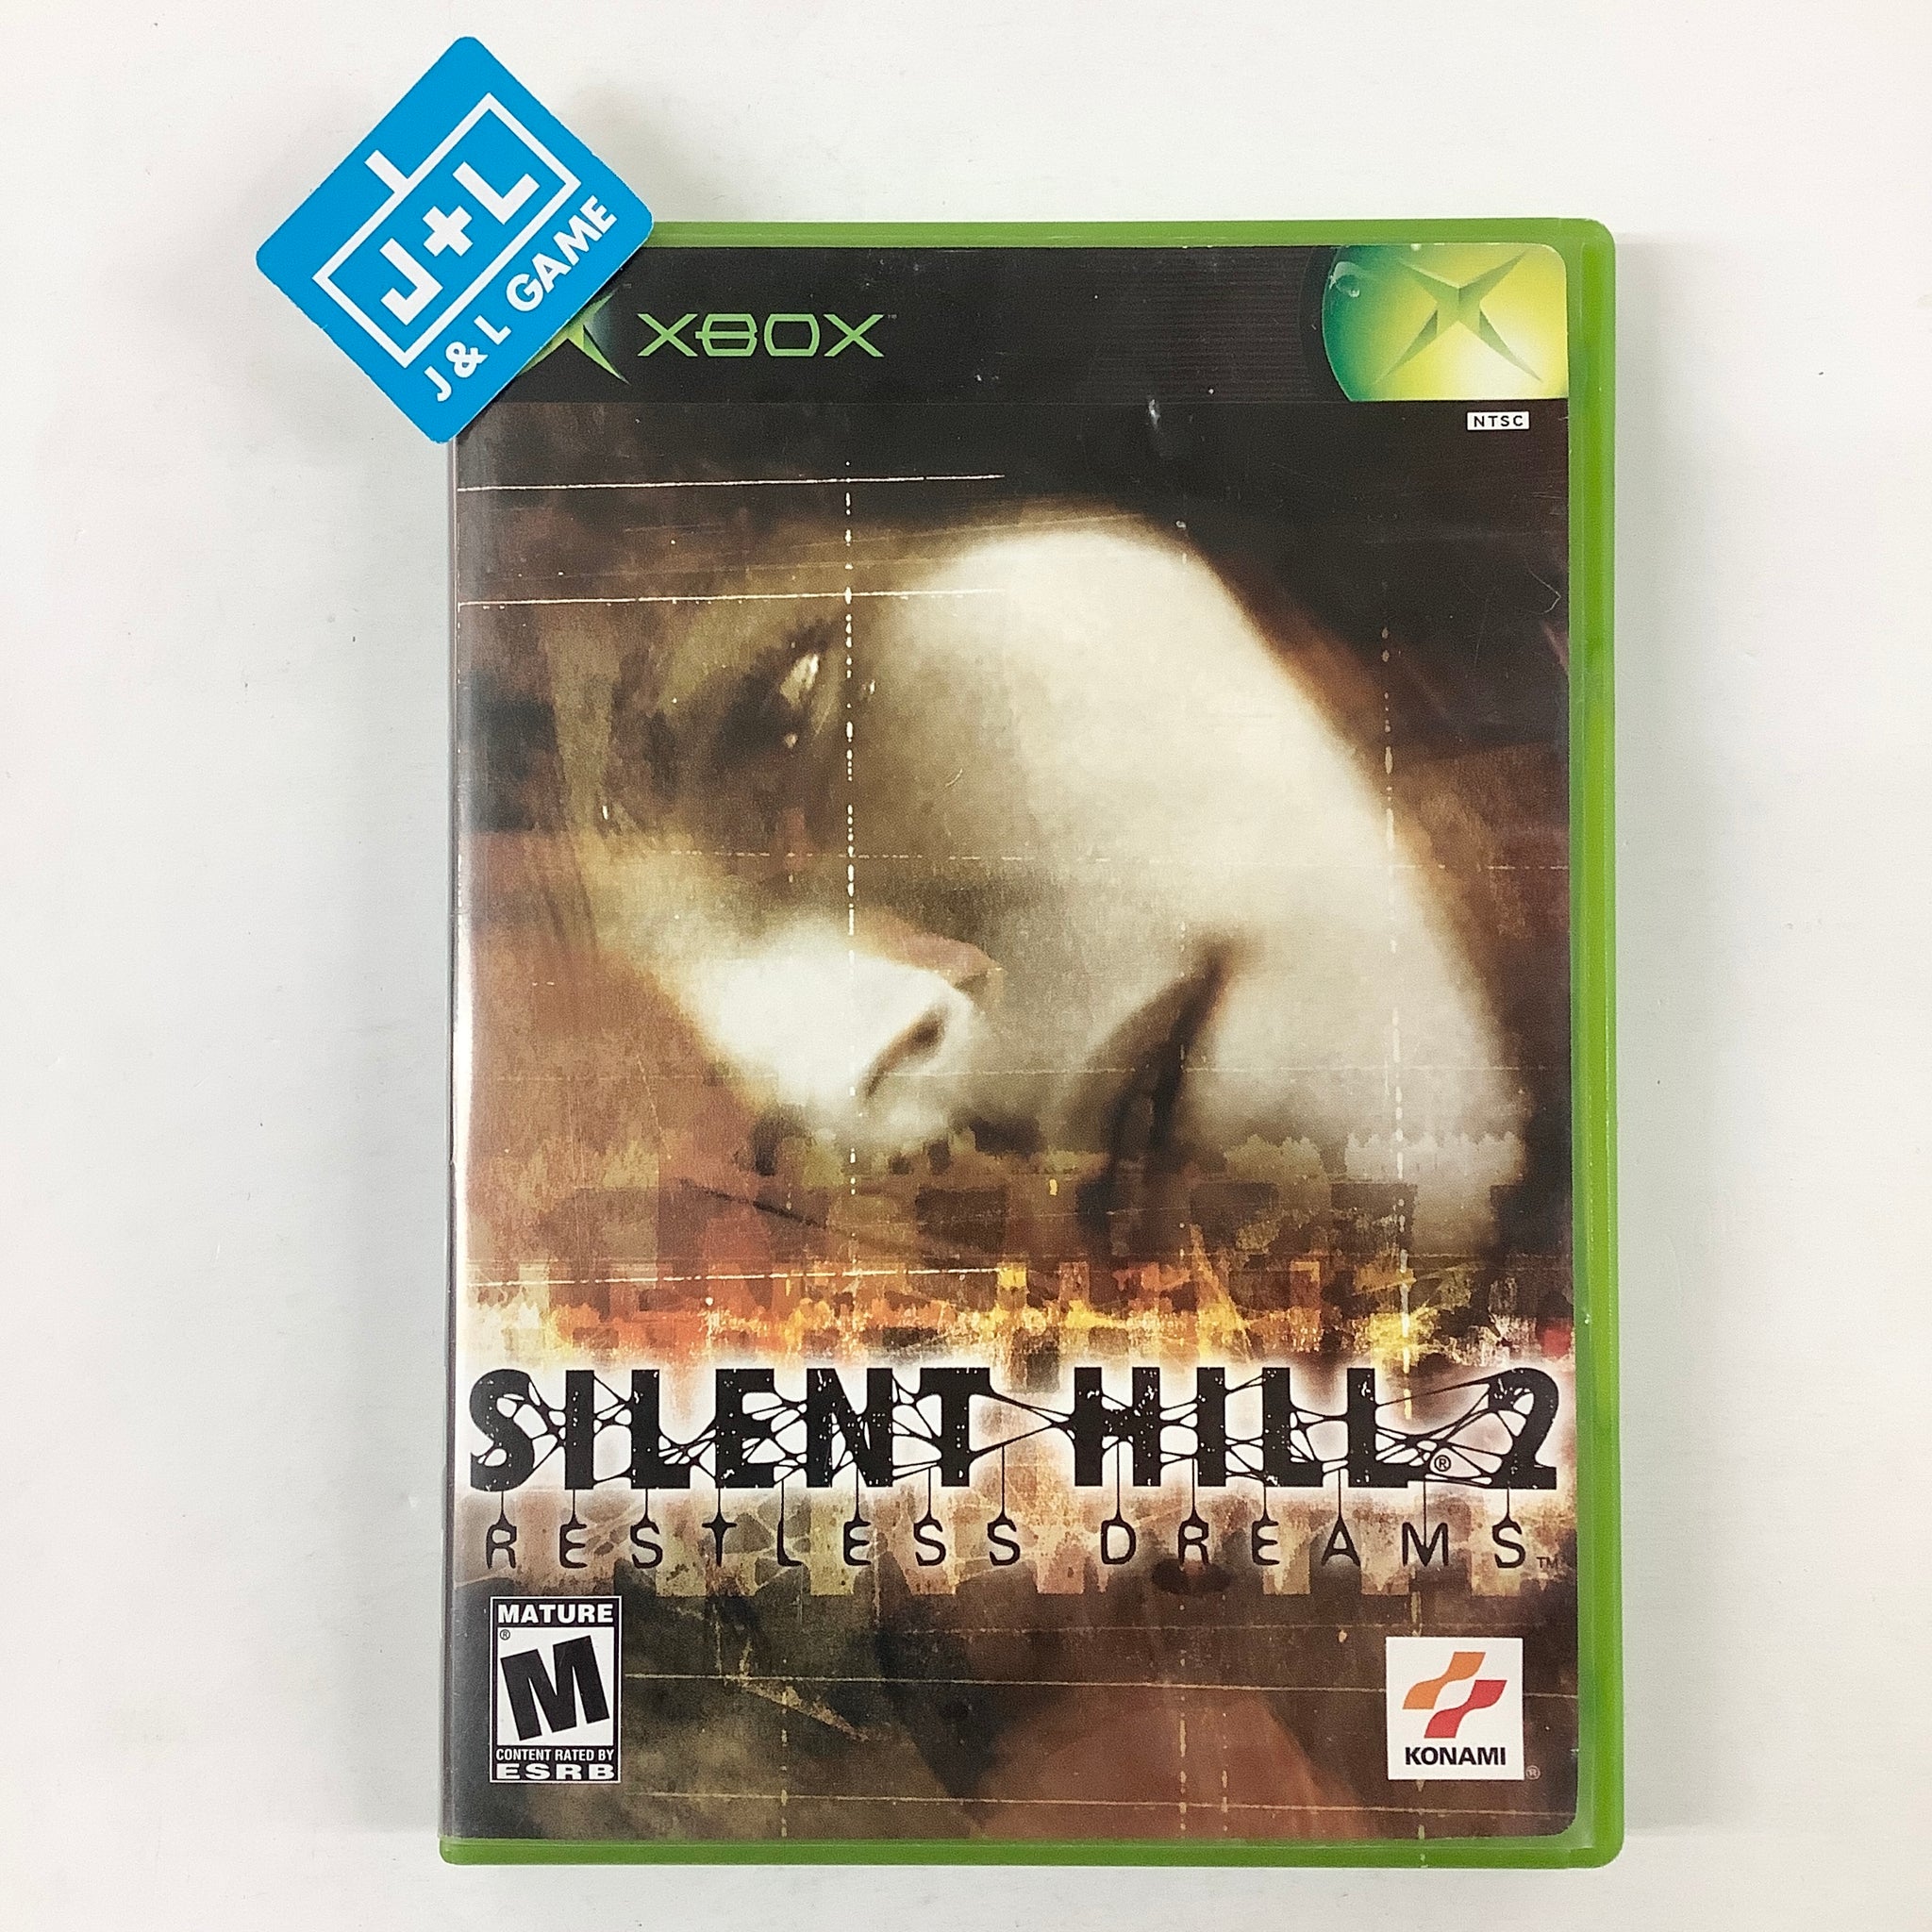  Silent Hill 2 : Konami: Video Games